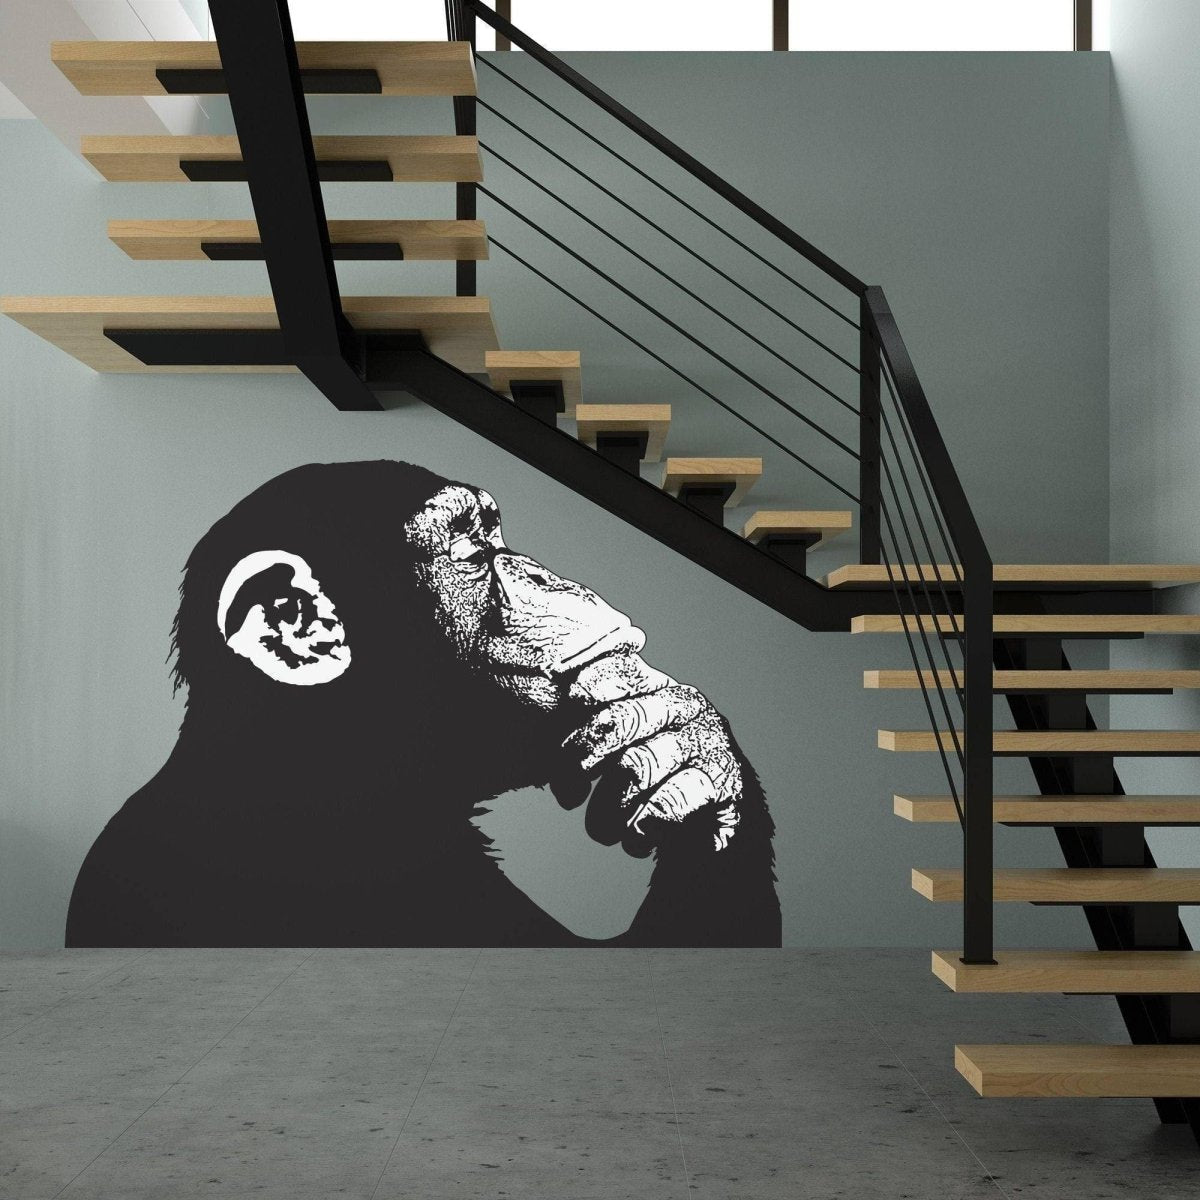 Artistic Primate Wall Decal - Contemporary Street Art Print Waterproof Vinyl Sticker - Decords